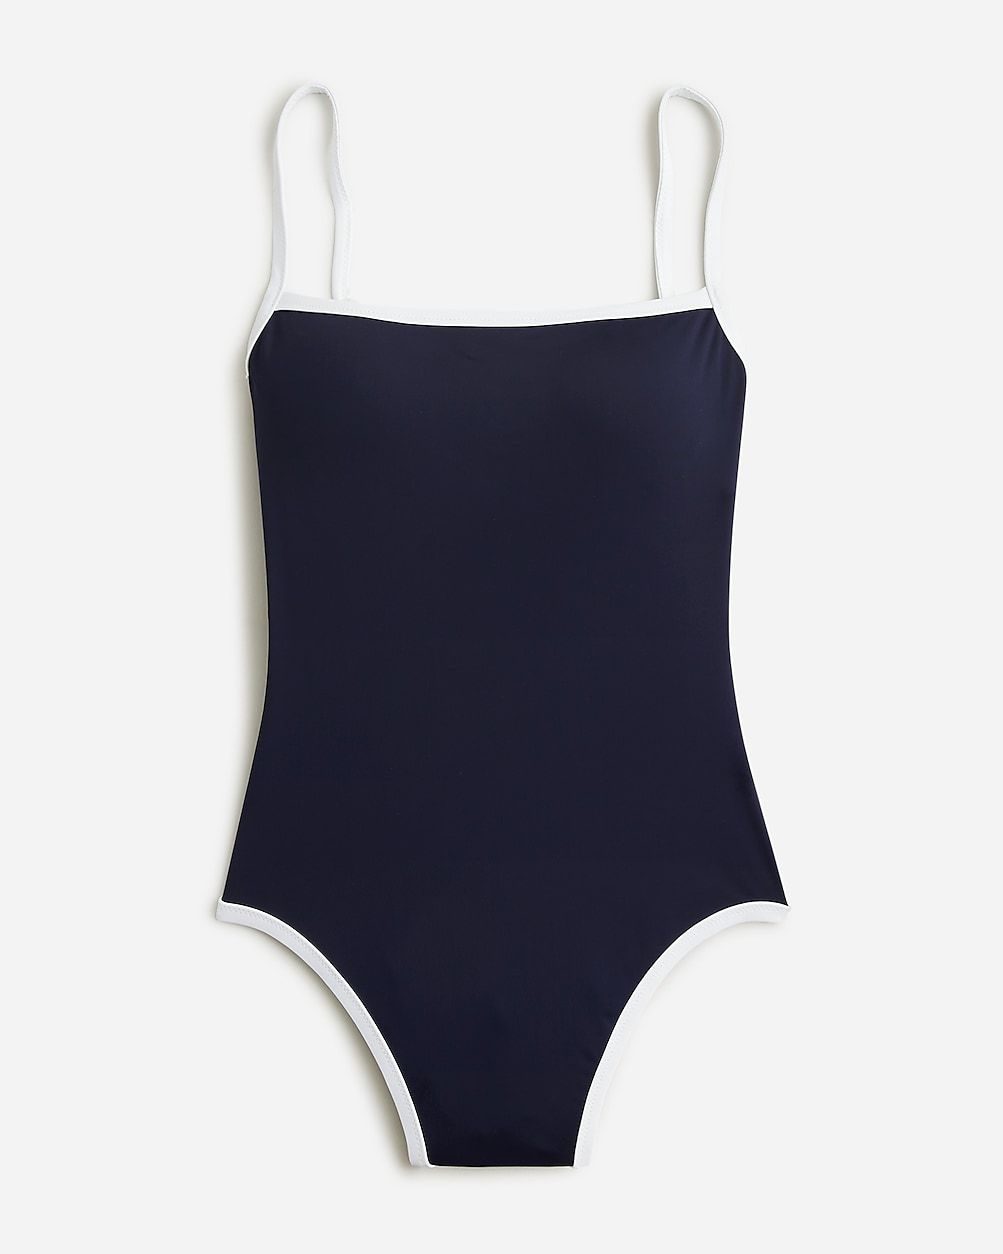 Squareneck one-piece swimsuit with contrast trim | J.Crew US